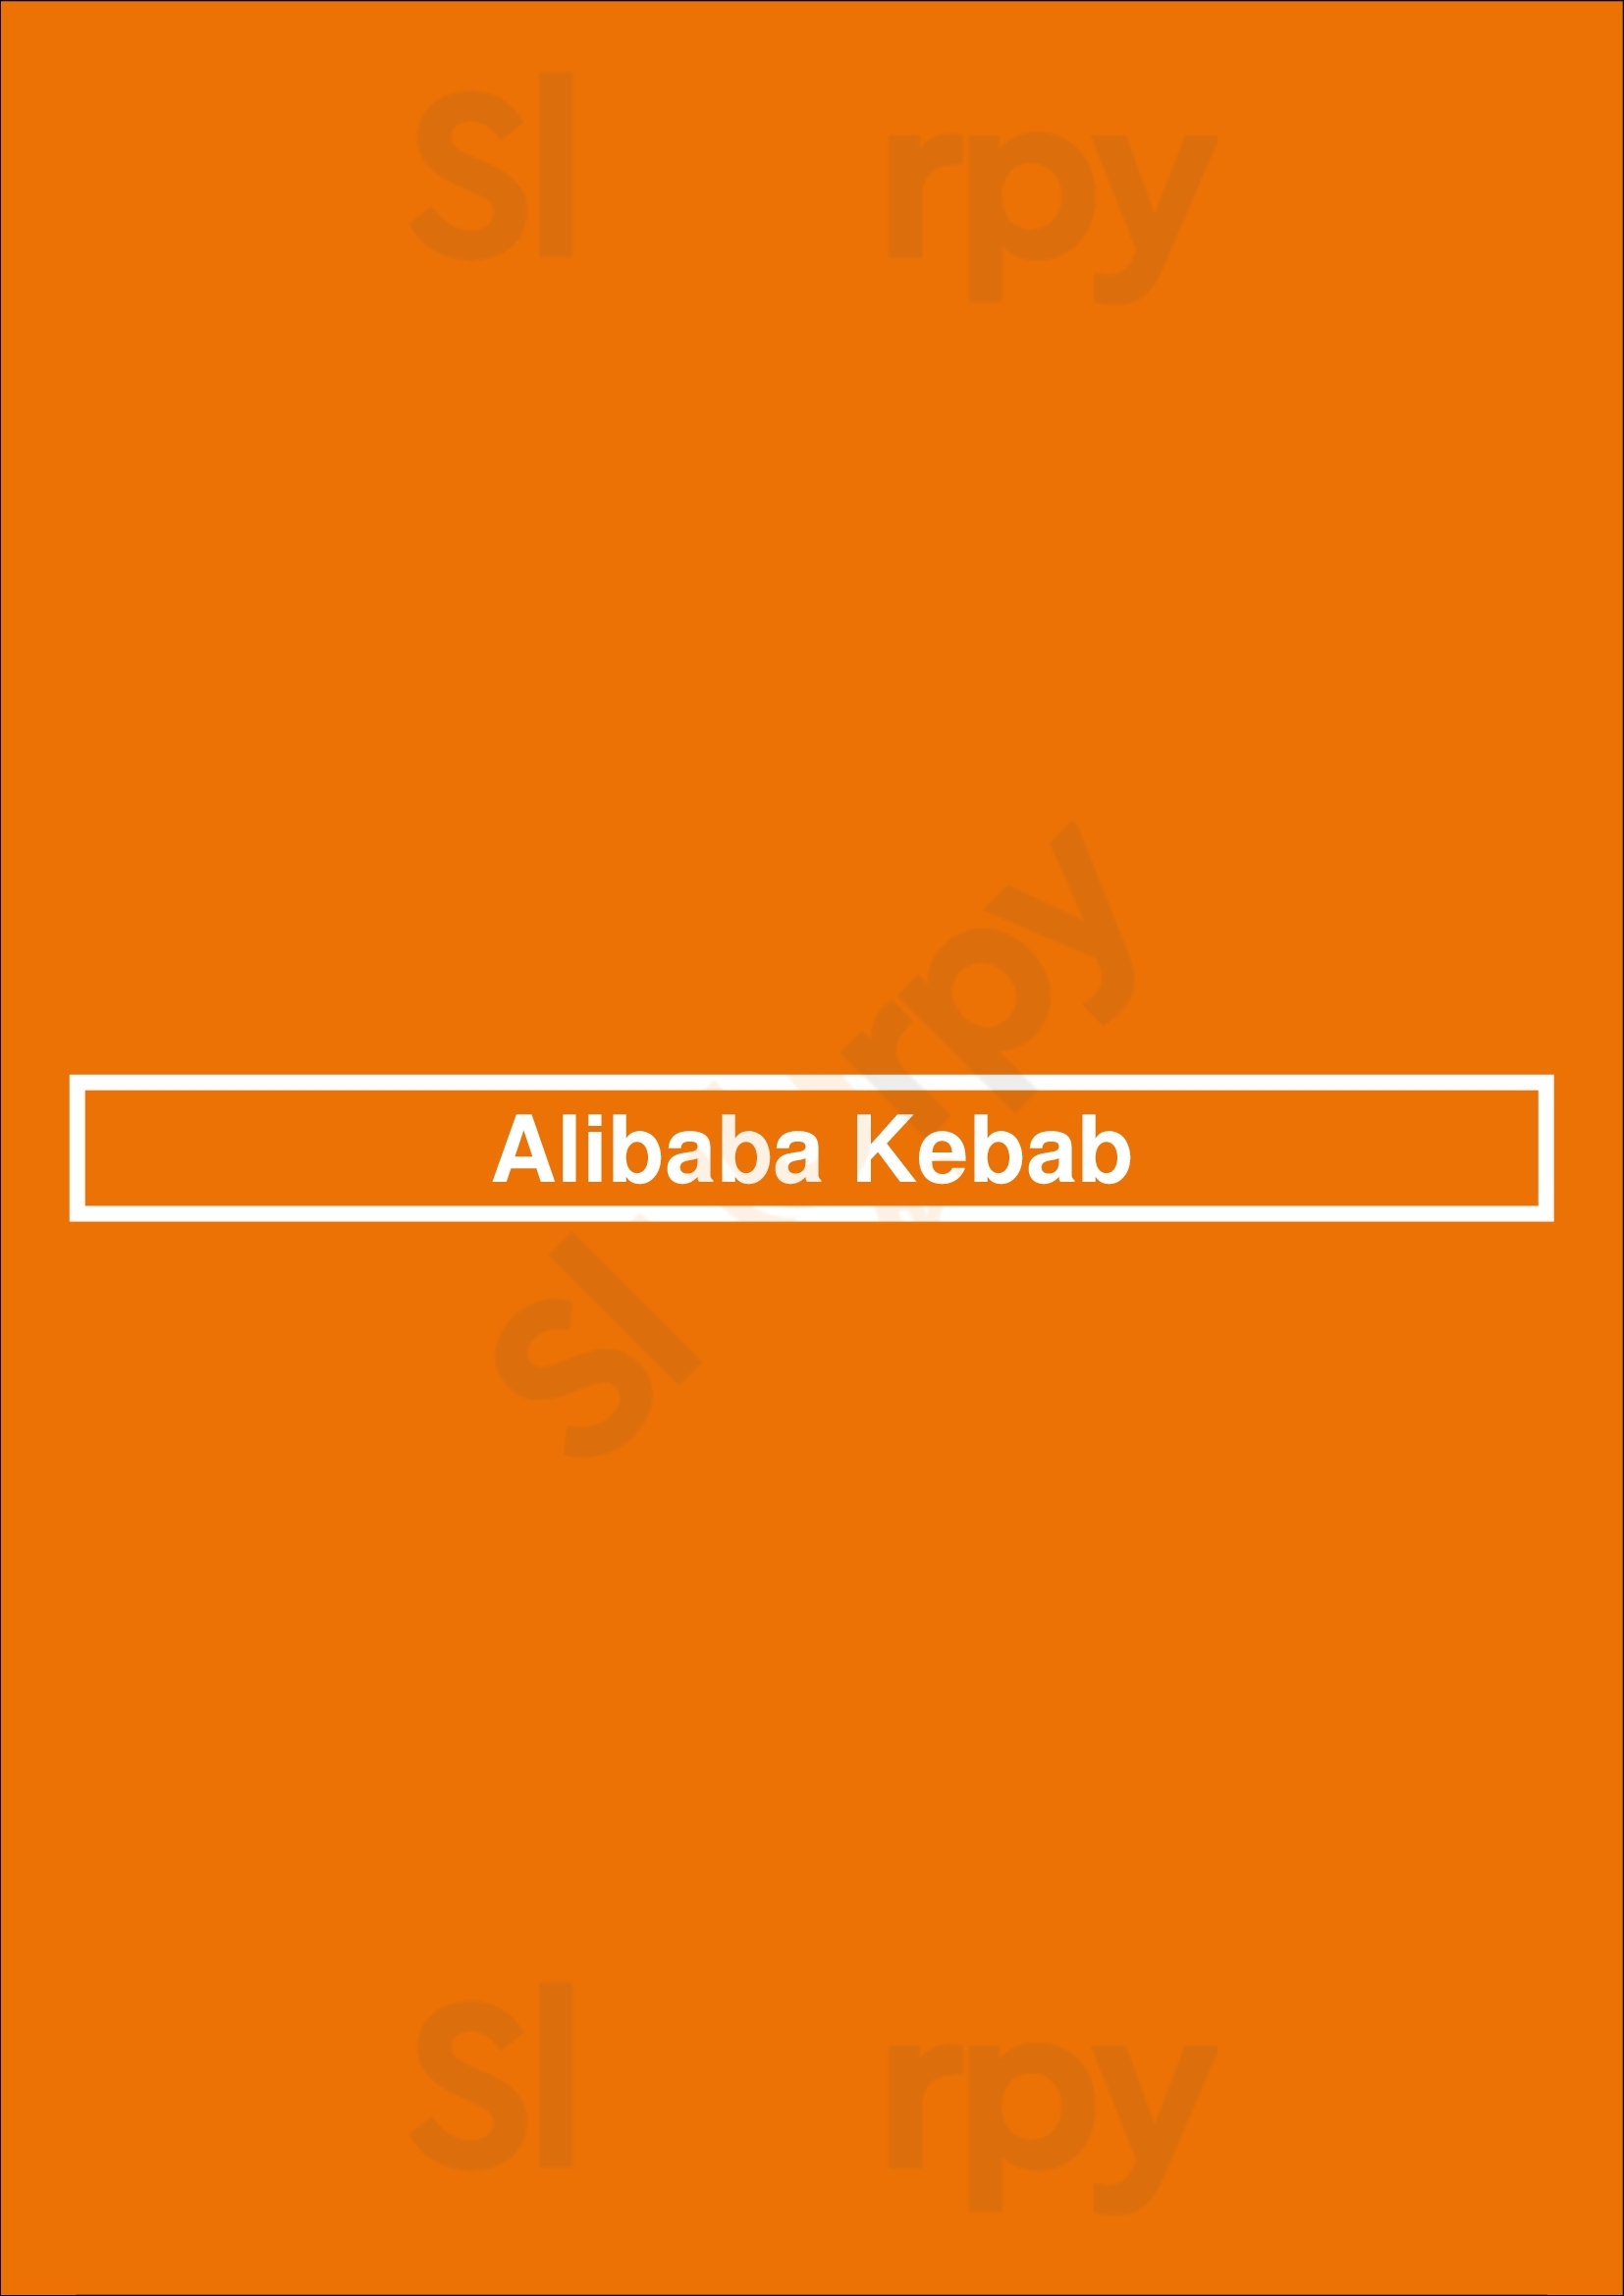 Alibaba Kebab Buffalo Menu - 1